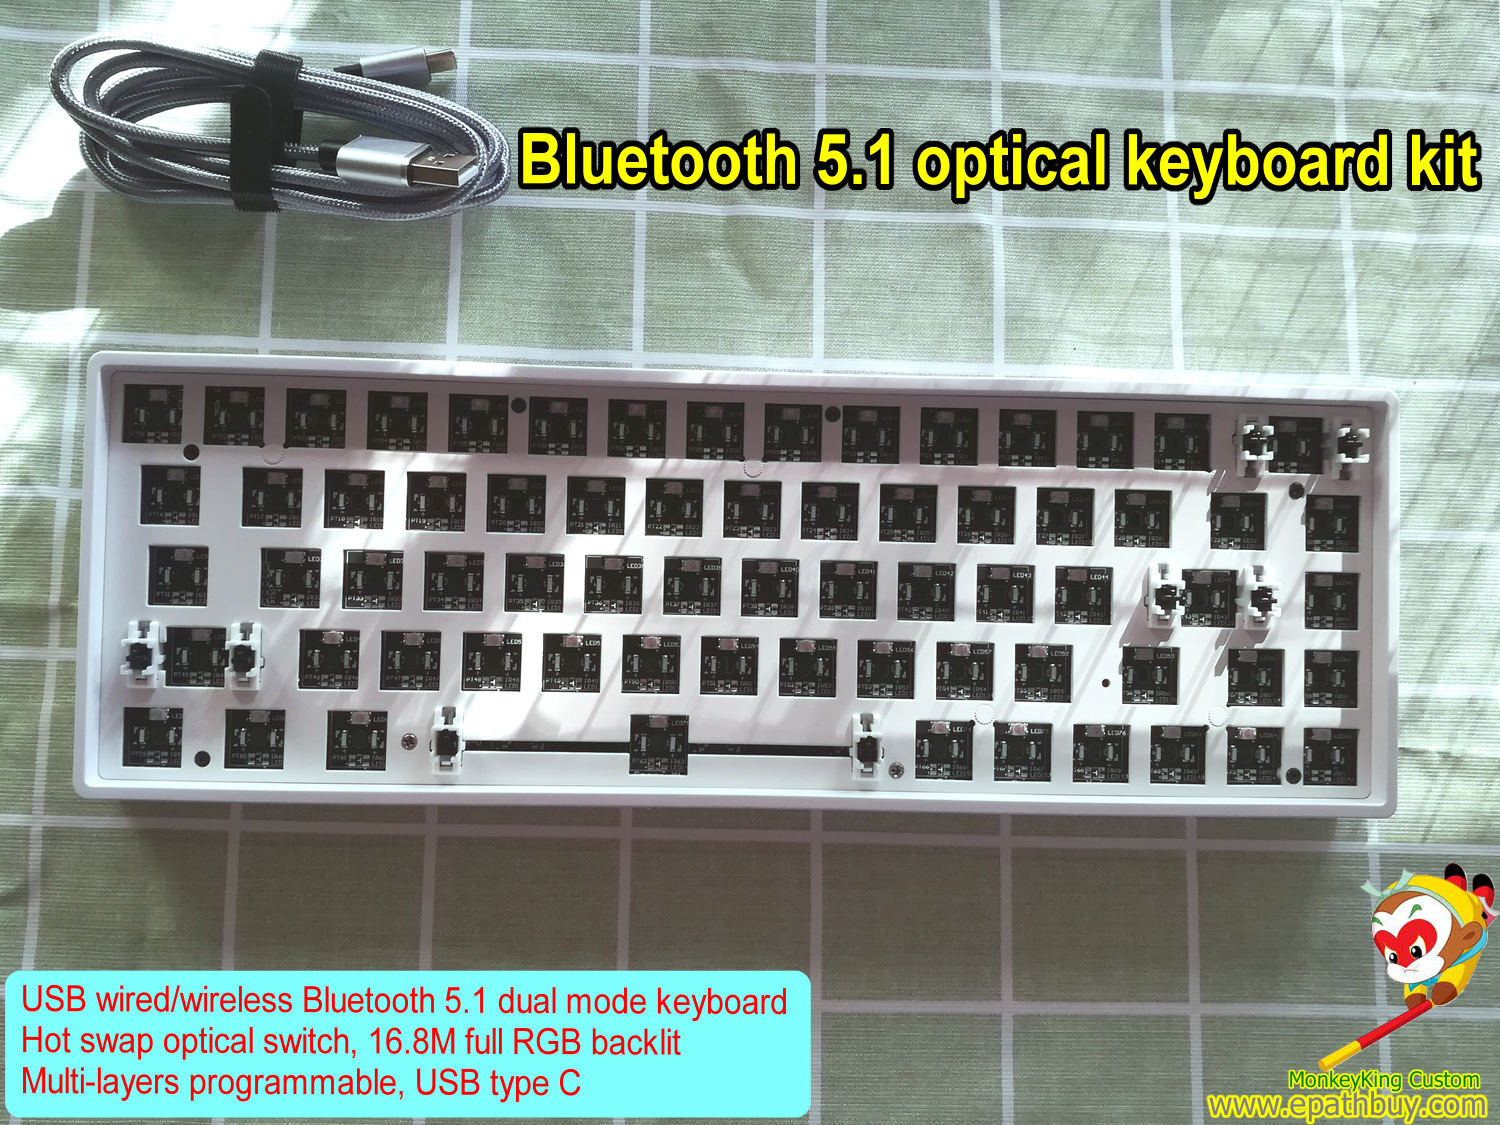 https://www.epathbuy.com/wp-content/uploads/custom-wireless-optical-keyboard-kit-60-68-keys-RGB-backlit-hot-swap.jpg